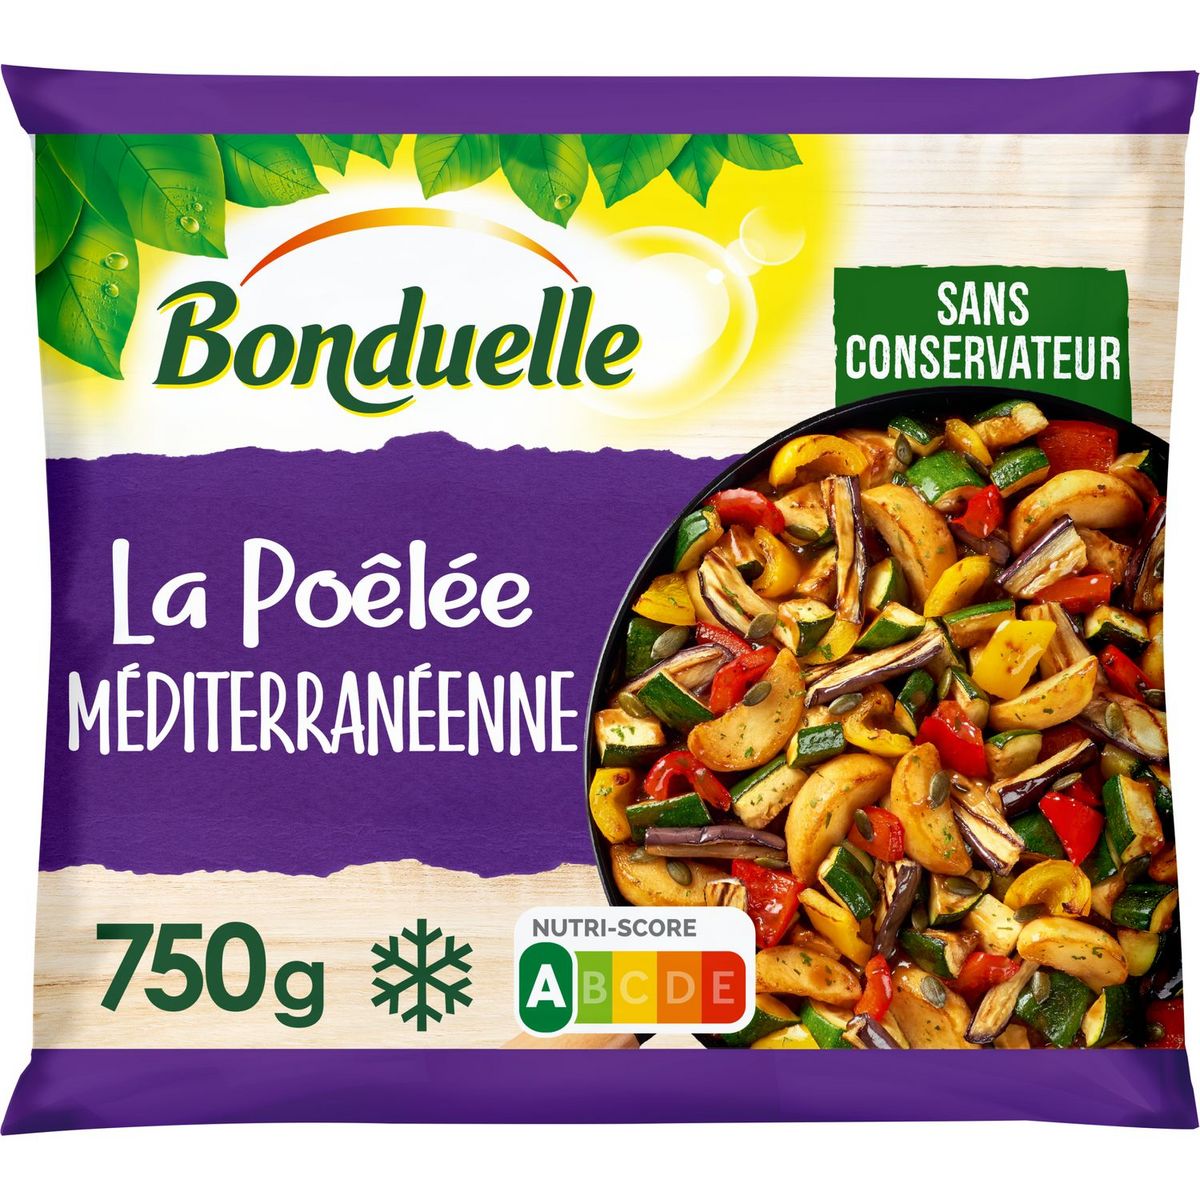 Bonduelle Mediterranean Frying Pan 5 servings 750g